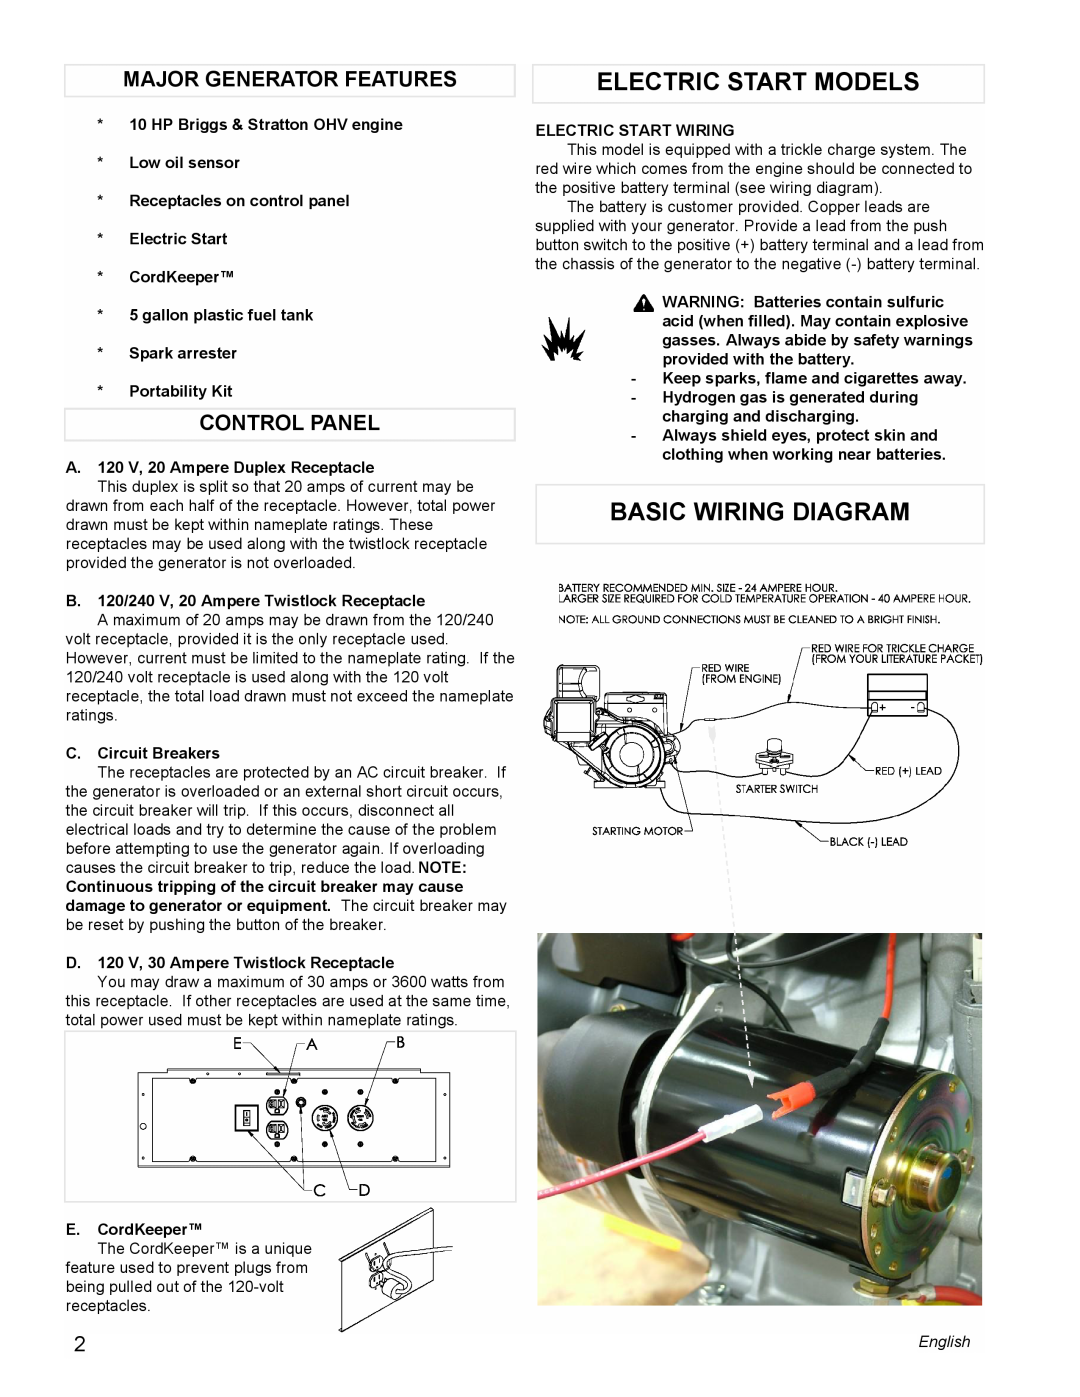 Powermate PMC505622 manual Electric Start Models, Basic Wiring Diagram, Major Generator Features, Control Panel, English 